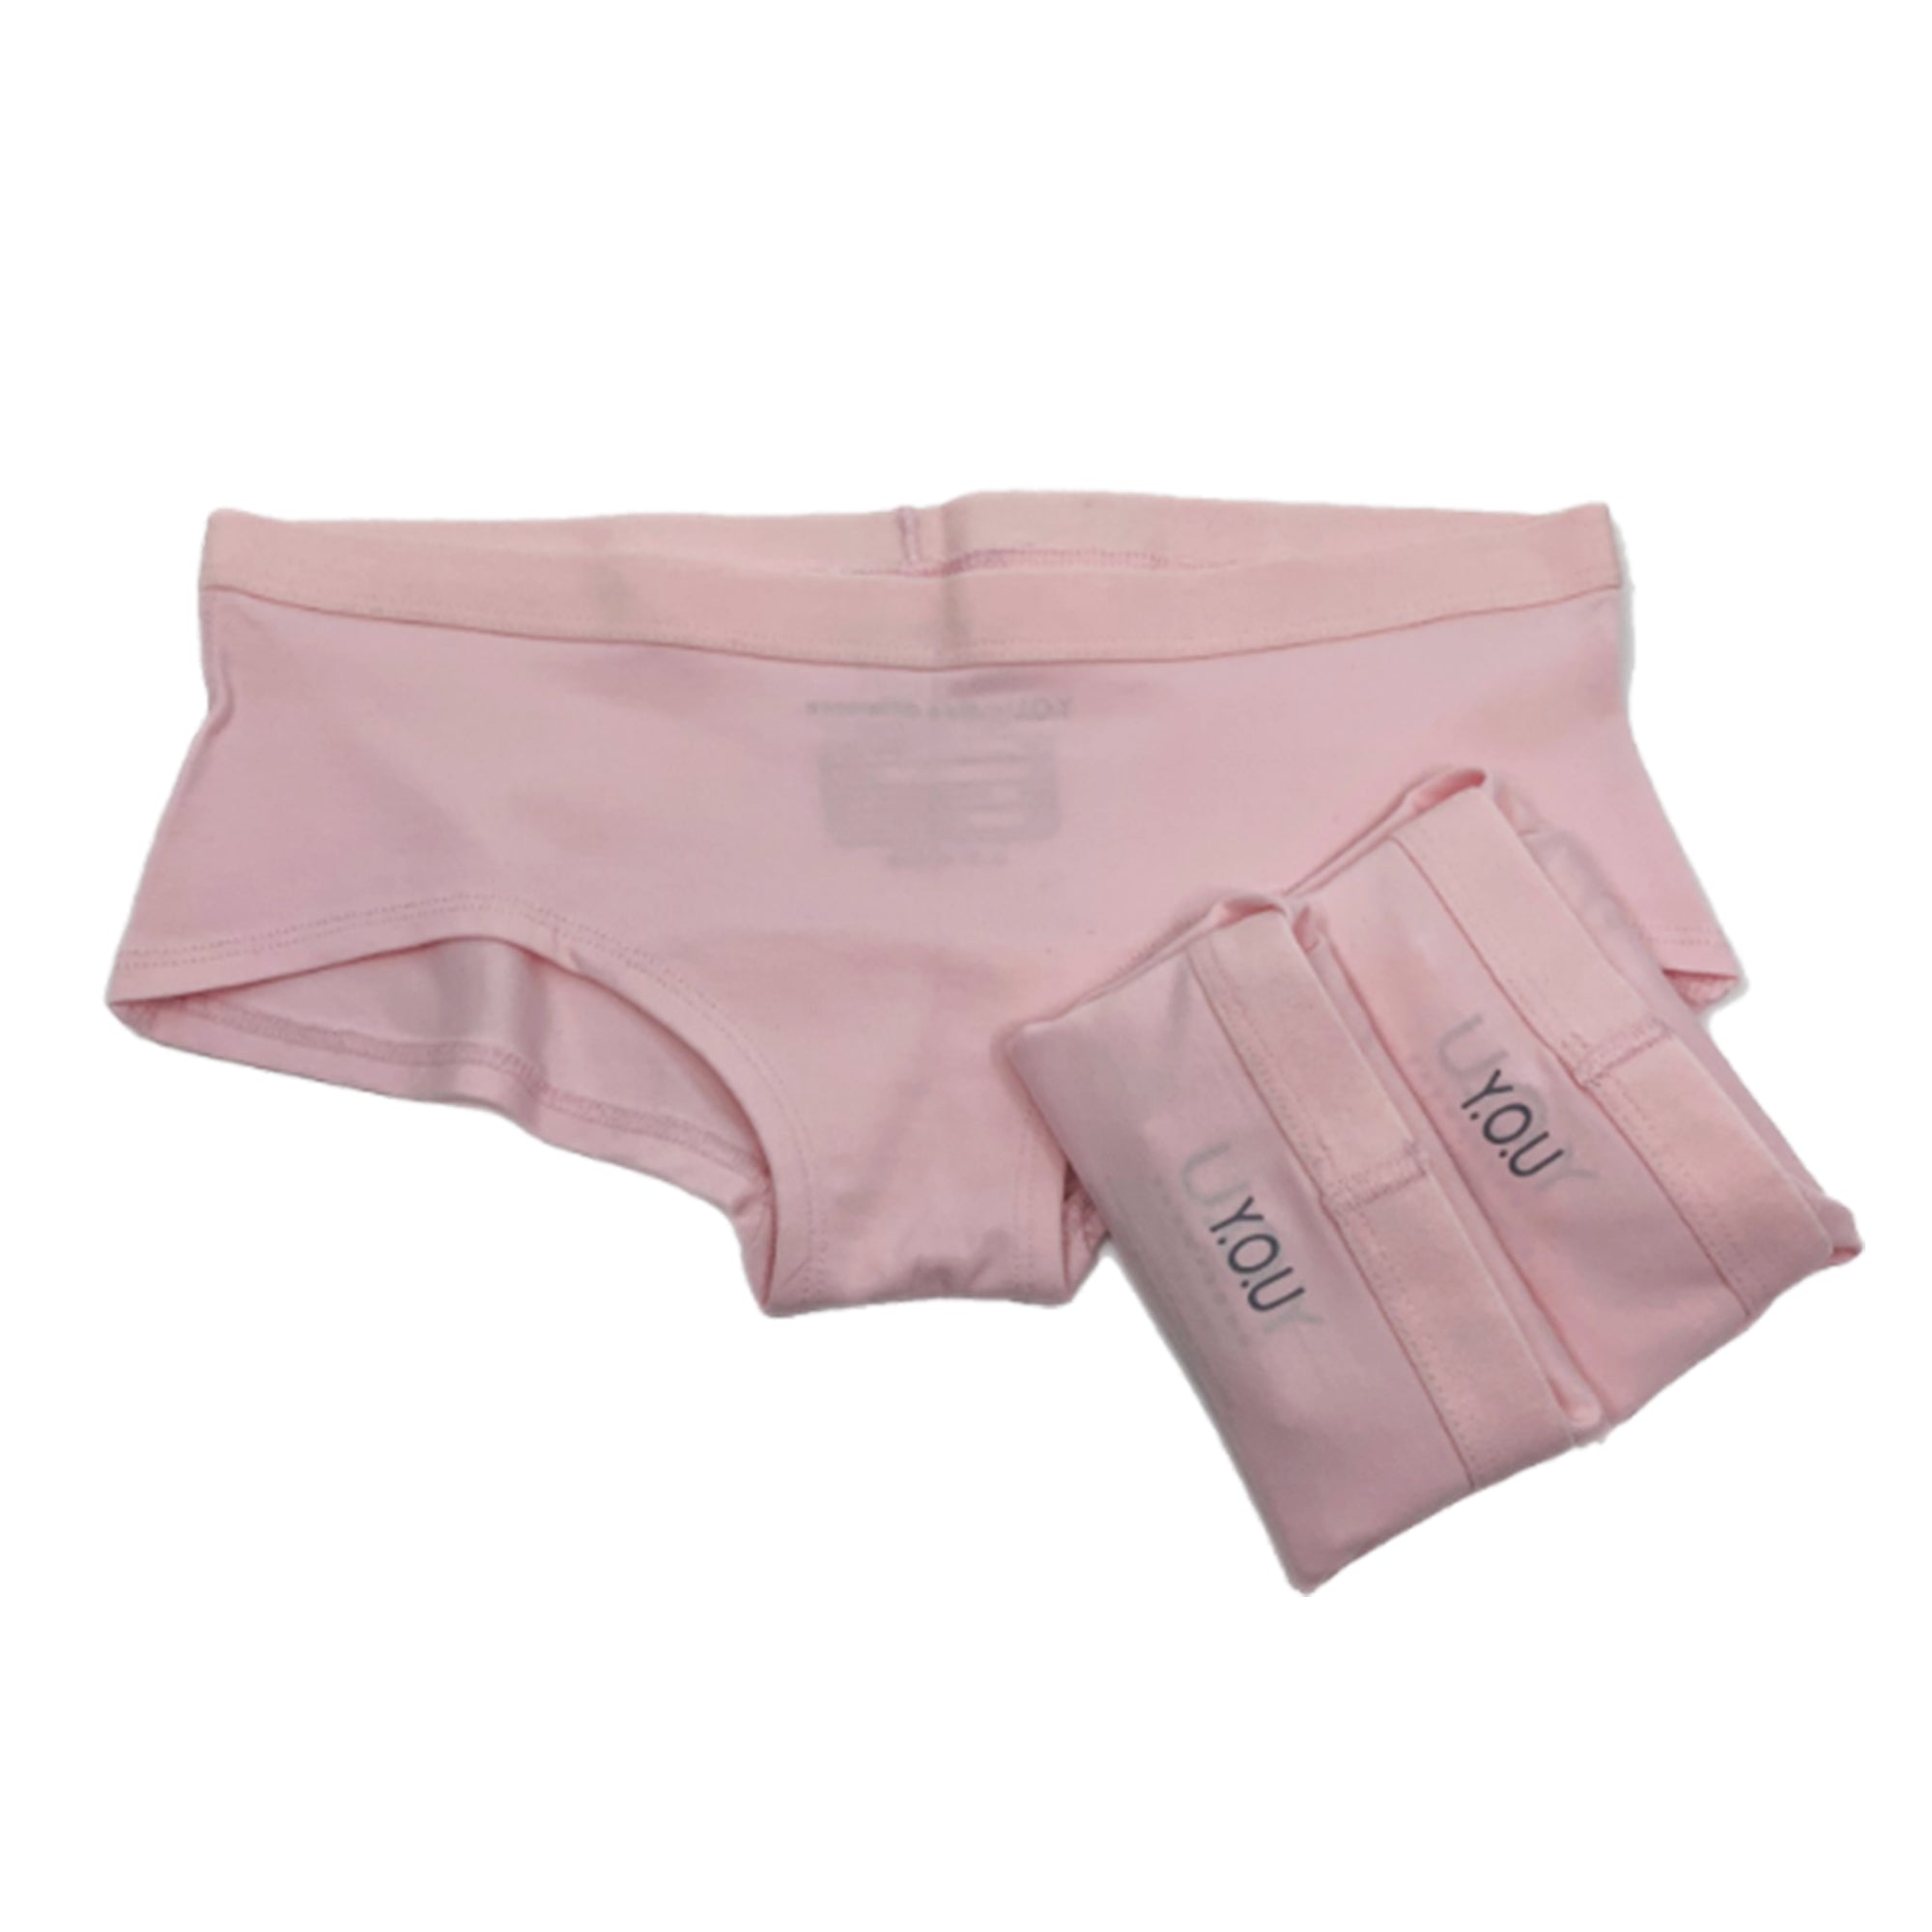 Women's organic cotton boy shorts - pack of 3 - Light Pink, 6